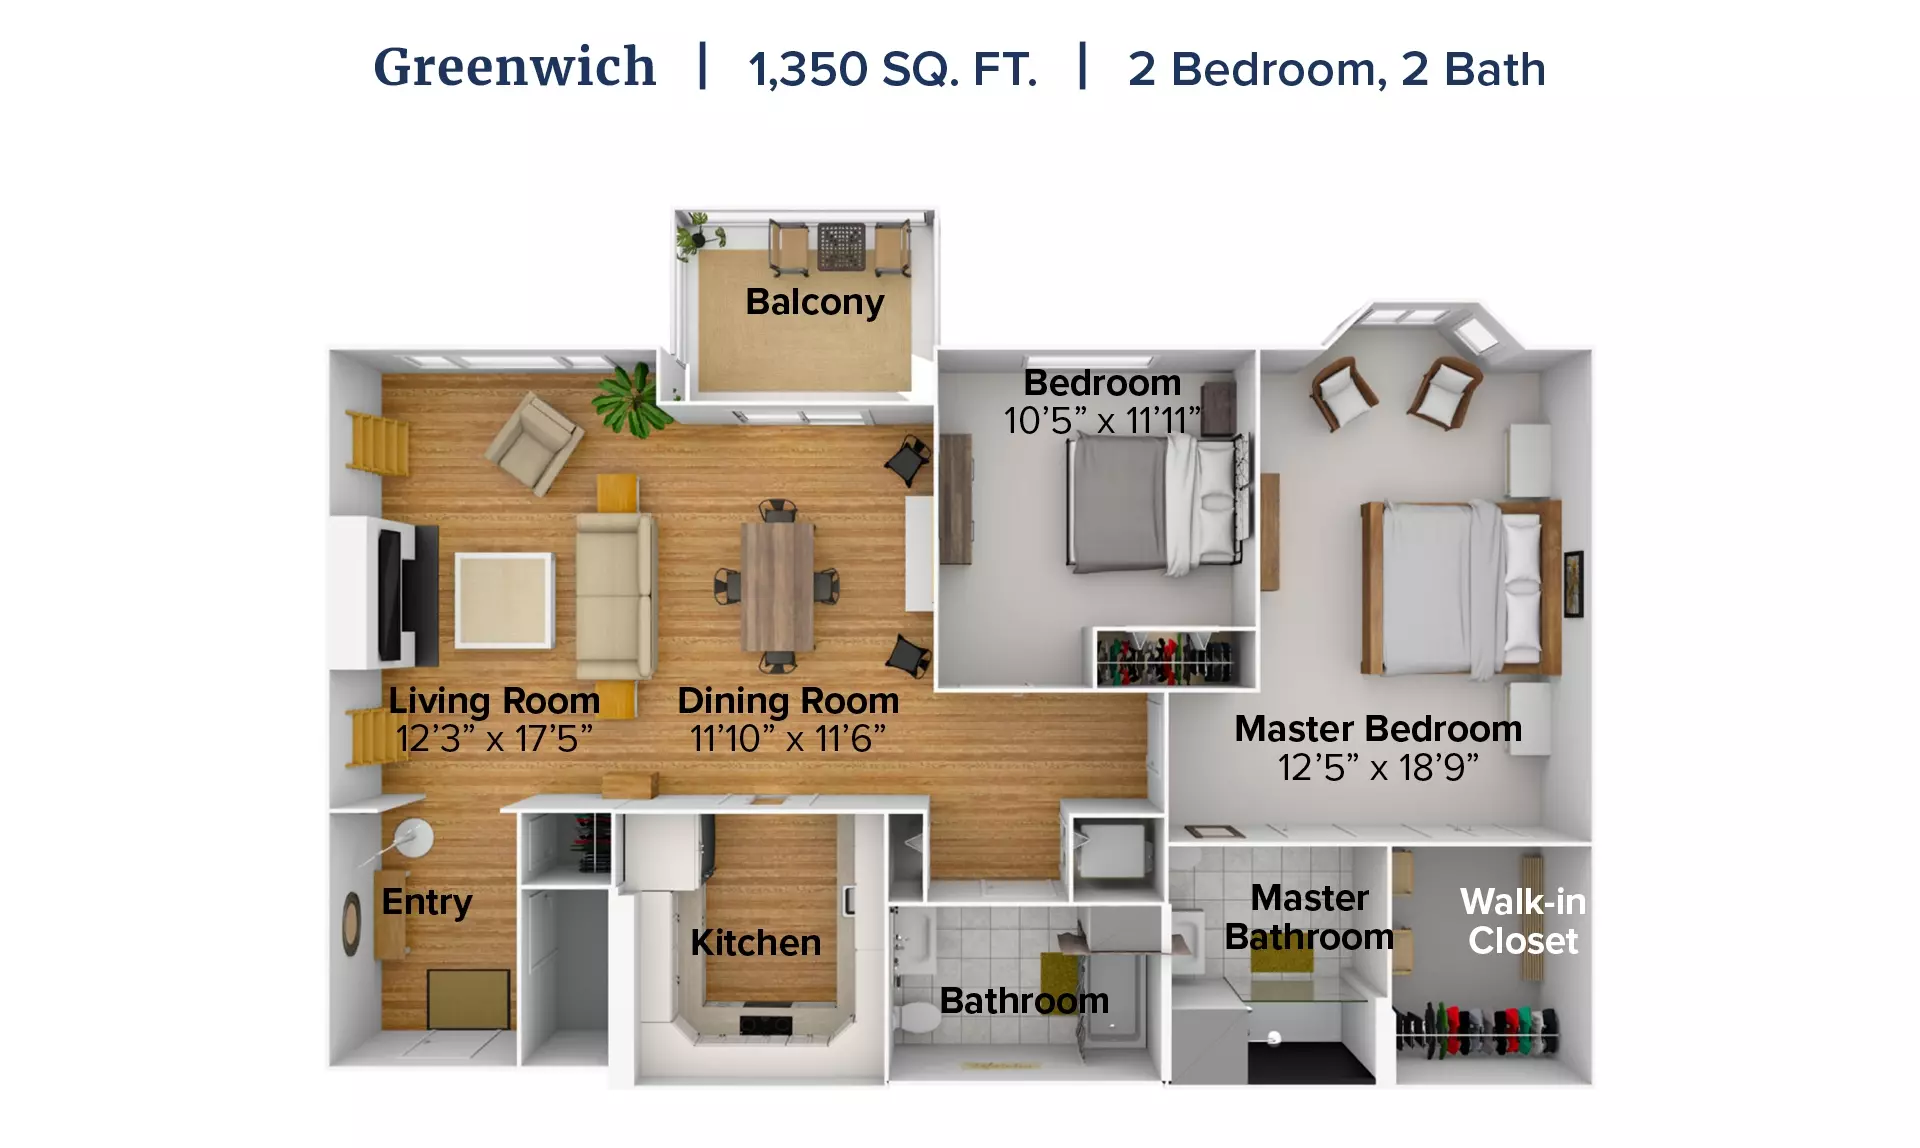 Greenwich apartment floor plan